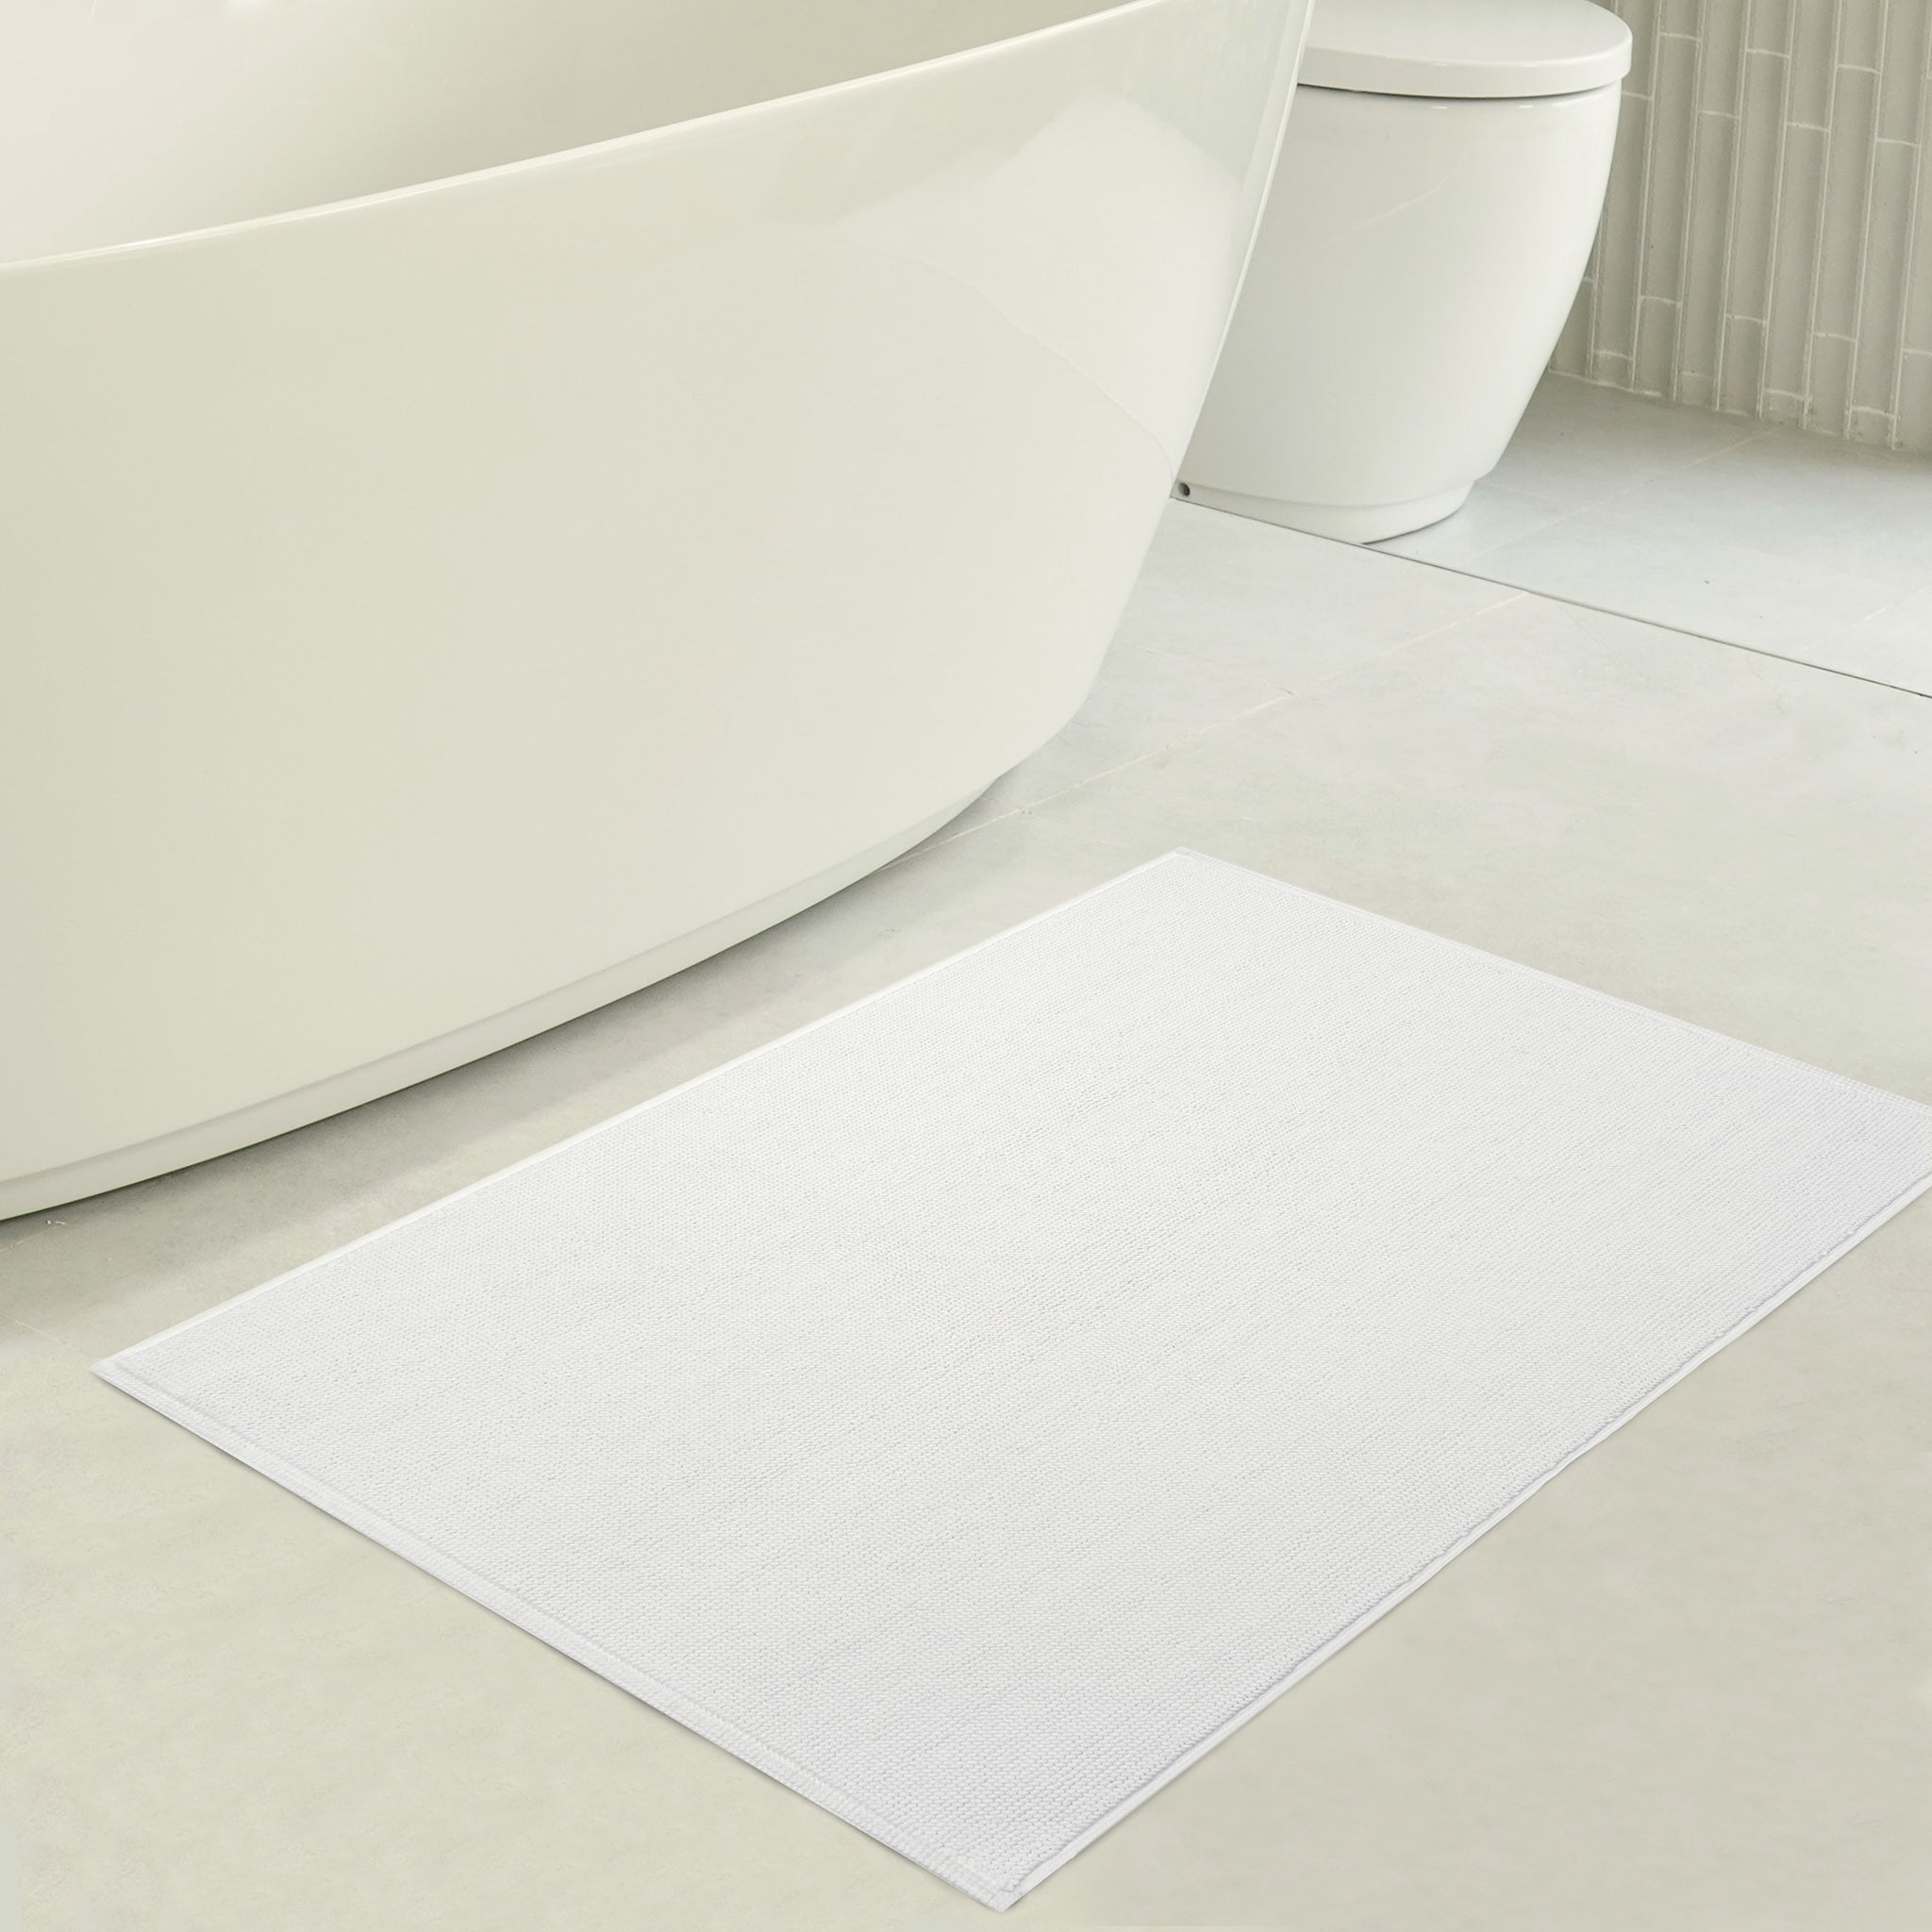 American Soft Linen, Non Slip Bath Rug, 100% Cotton 17x24 Inches, Soft Absorbent Bath Mat Rugs, White, Size: Bath Rug Cotton 17x24